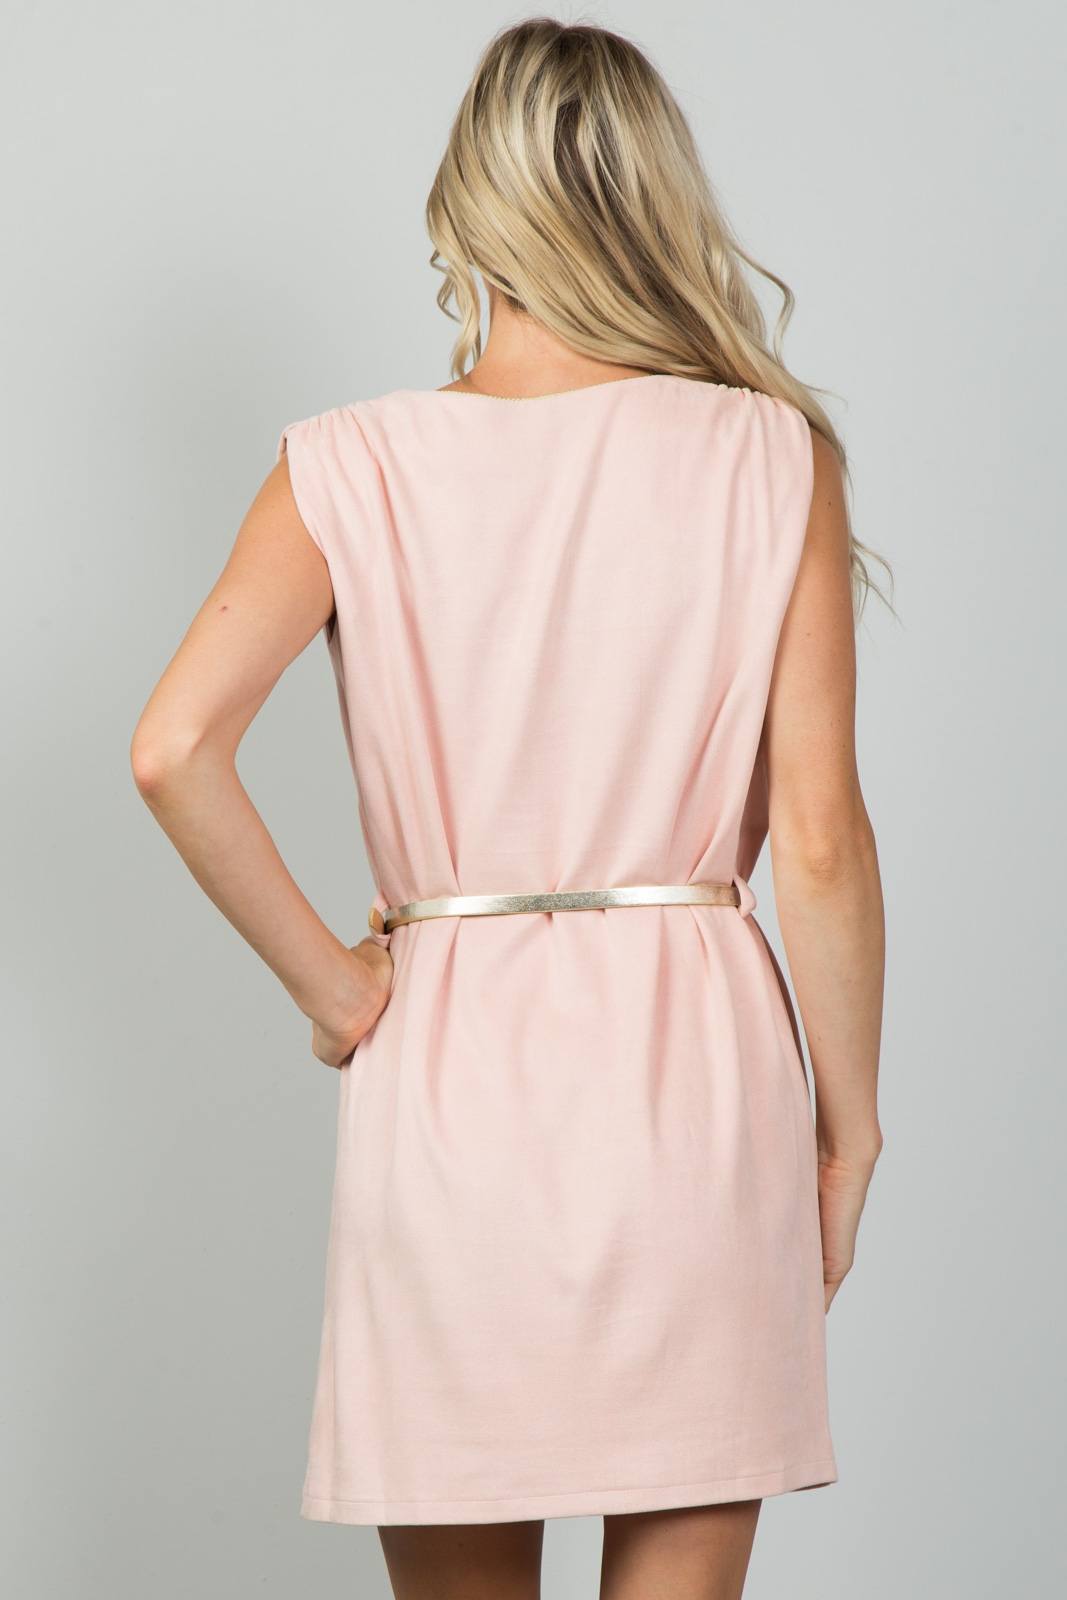 Ladies fashion gold rope neckline applique pink faux suede belted mini dress